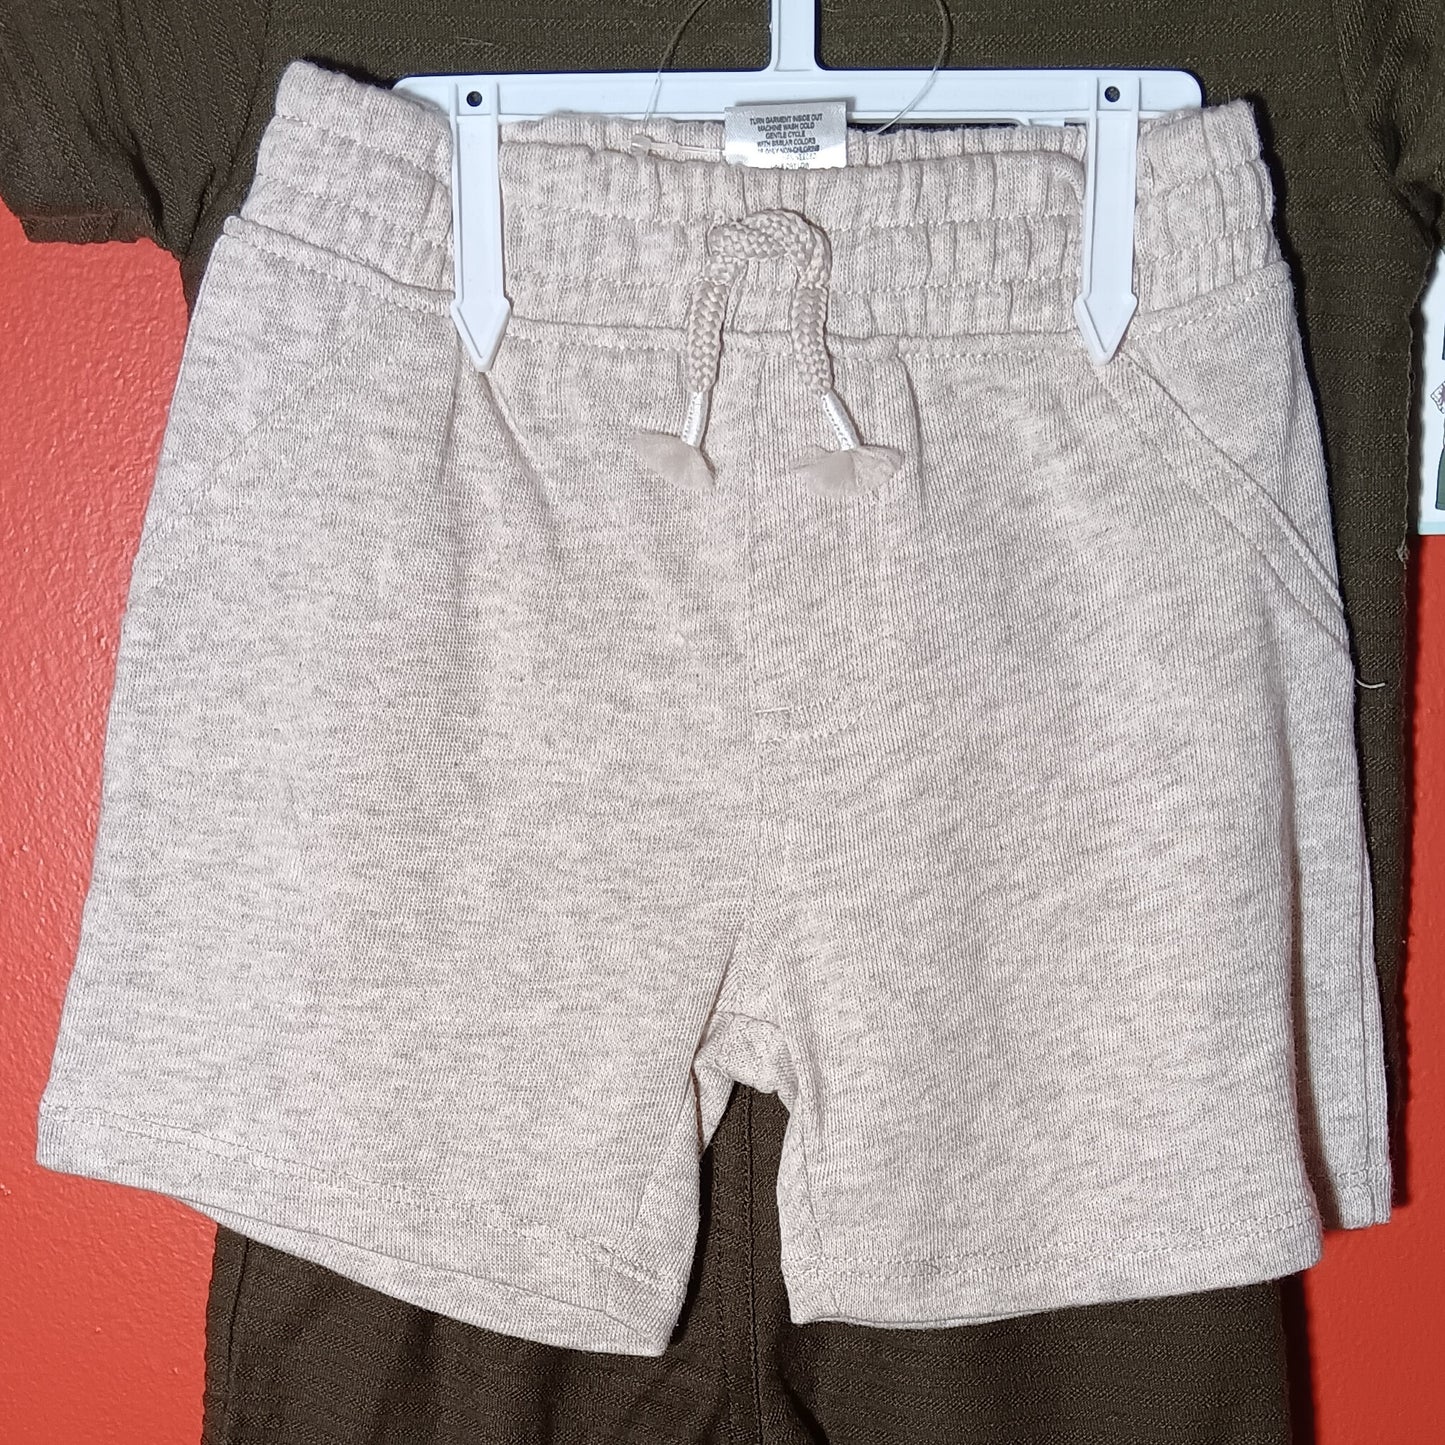 Little Lad

Baby Boys 4 Pc Shorts Set - Multi

Select a size:
12m